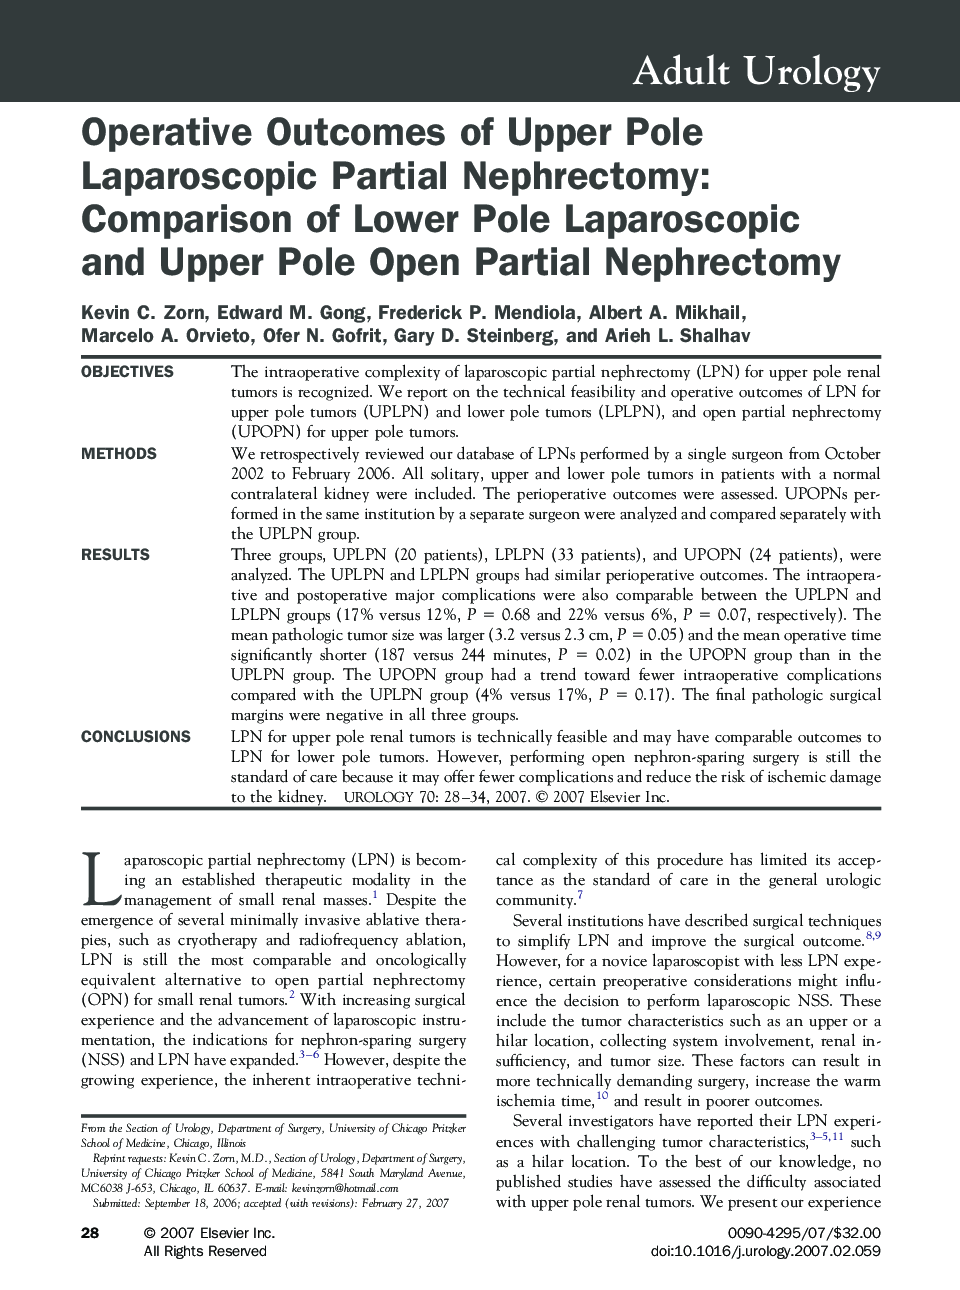 Operative Outcomes of Upper Pole Laparoscopic Partial Nephrectomy: Comparison of Lower Pole Laparoscopic and Upper Pole Open Partial Nephrectomy